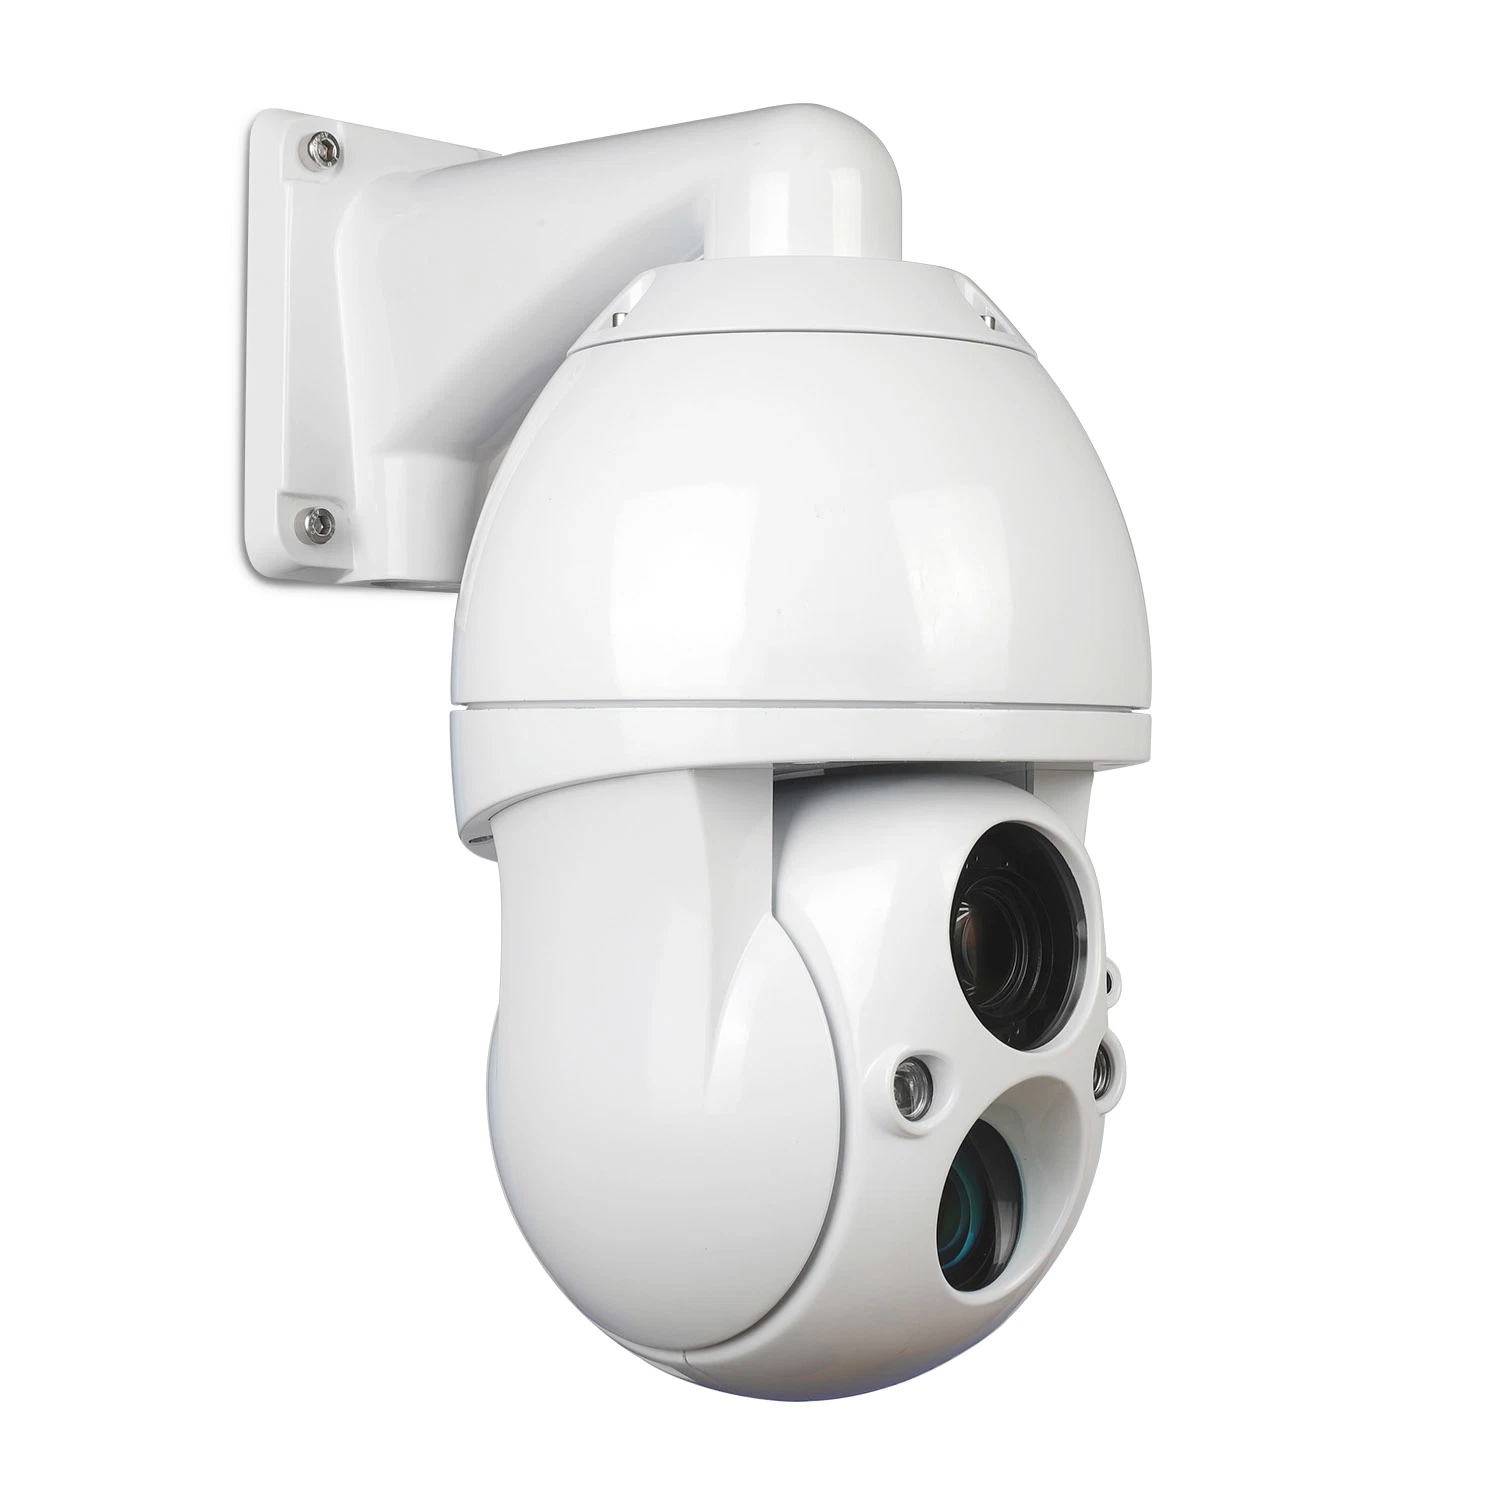 8MP 30X Optical Zoom IR Laser Outdoor PTZ Security Hikvision CCTV Camera